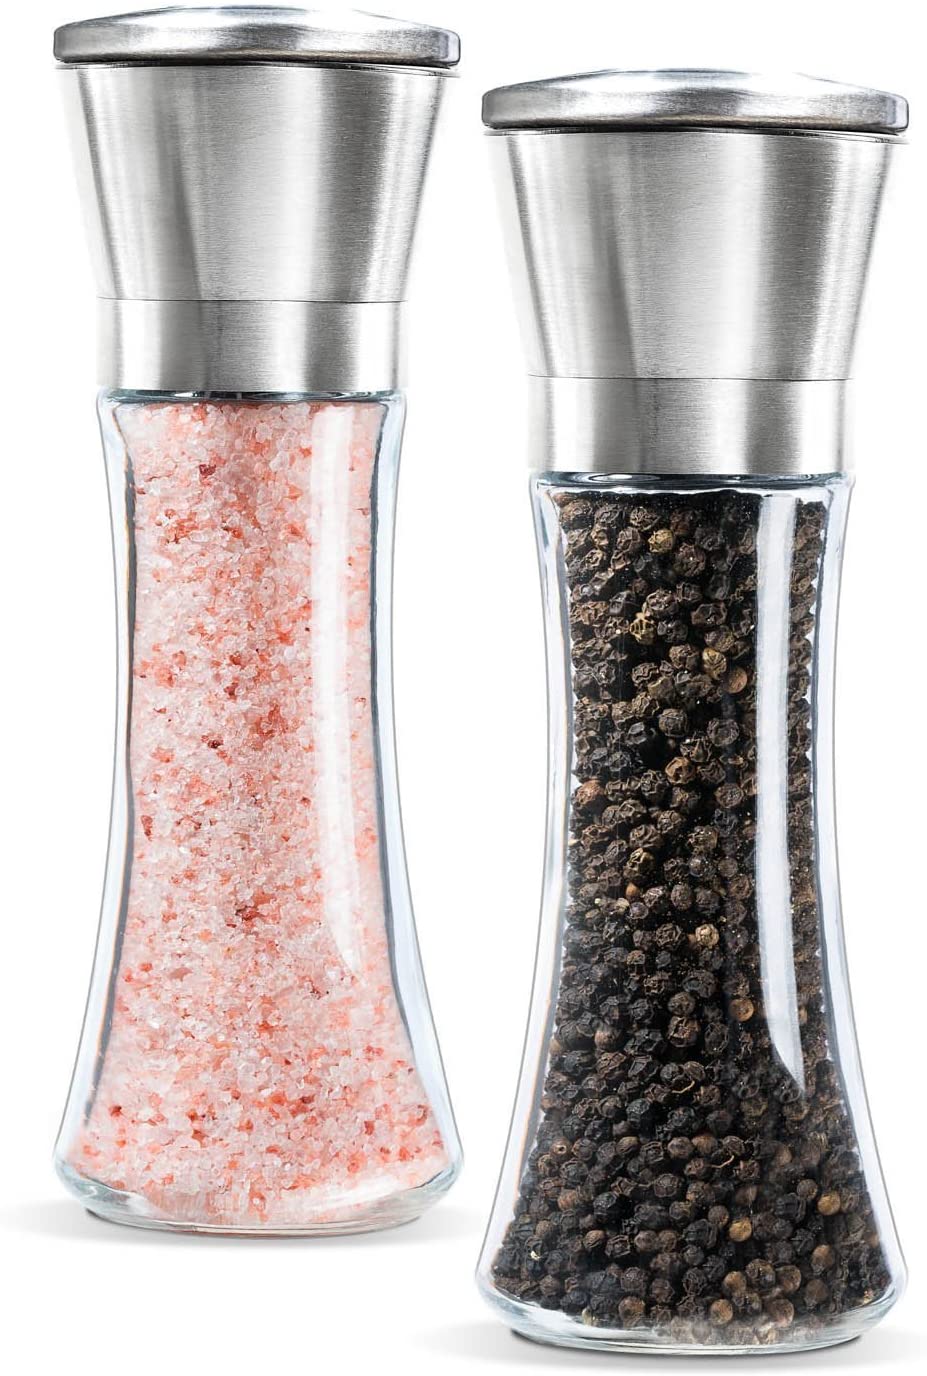 Set of 2 Salt and Pepper Grinder Set, Stainless Steel Pepper Mills , Salt and Pepper Shakers